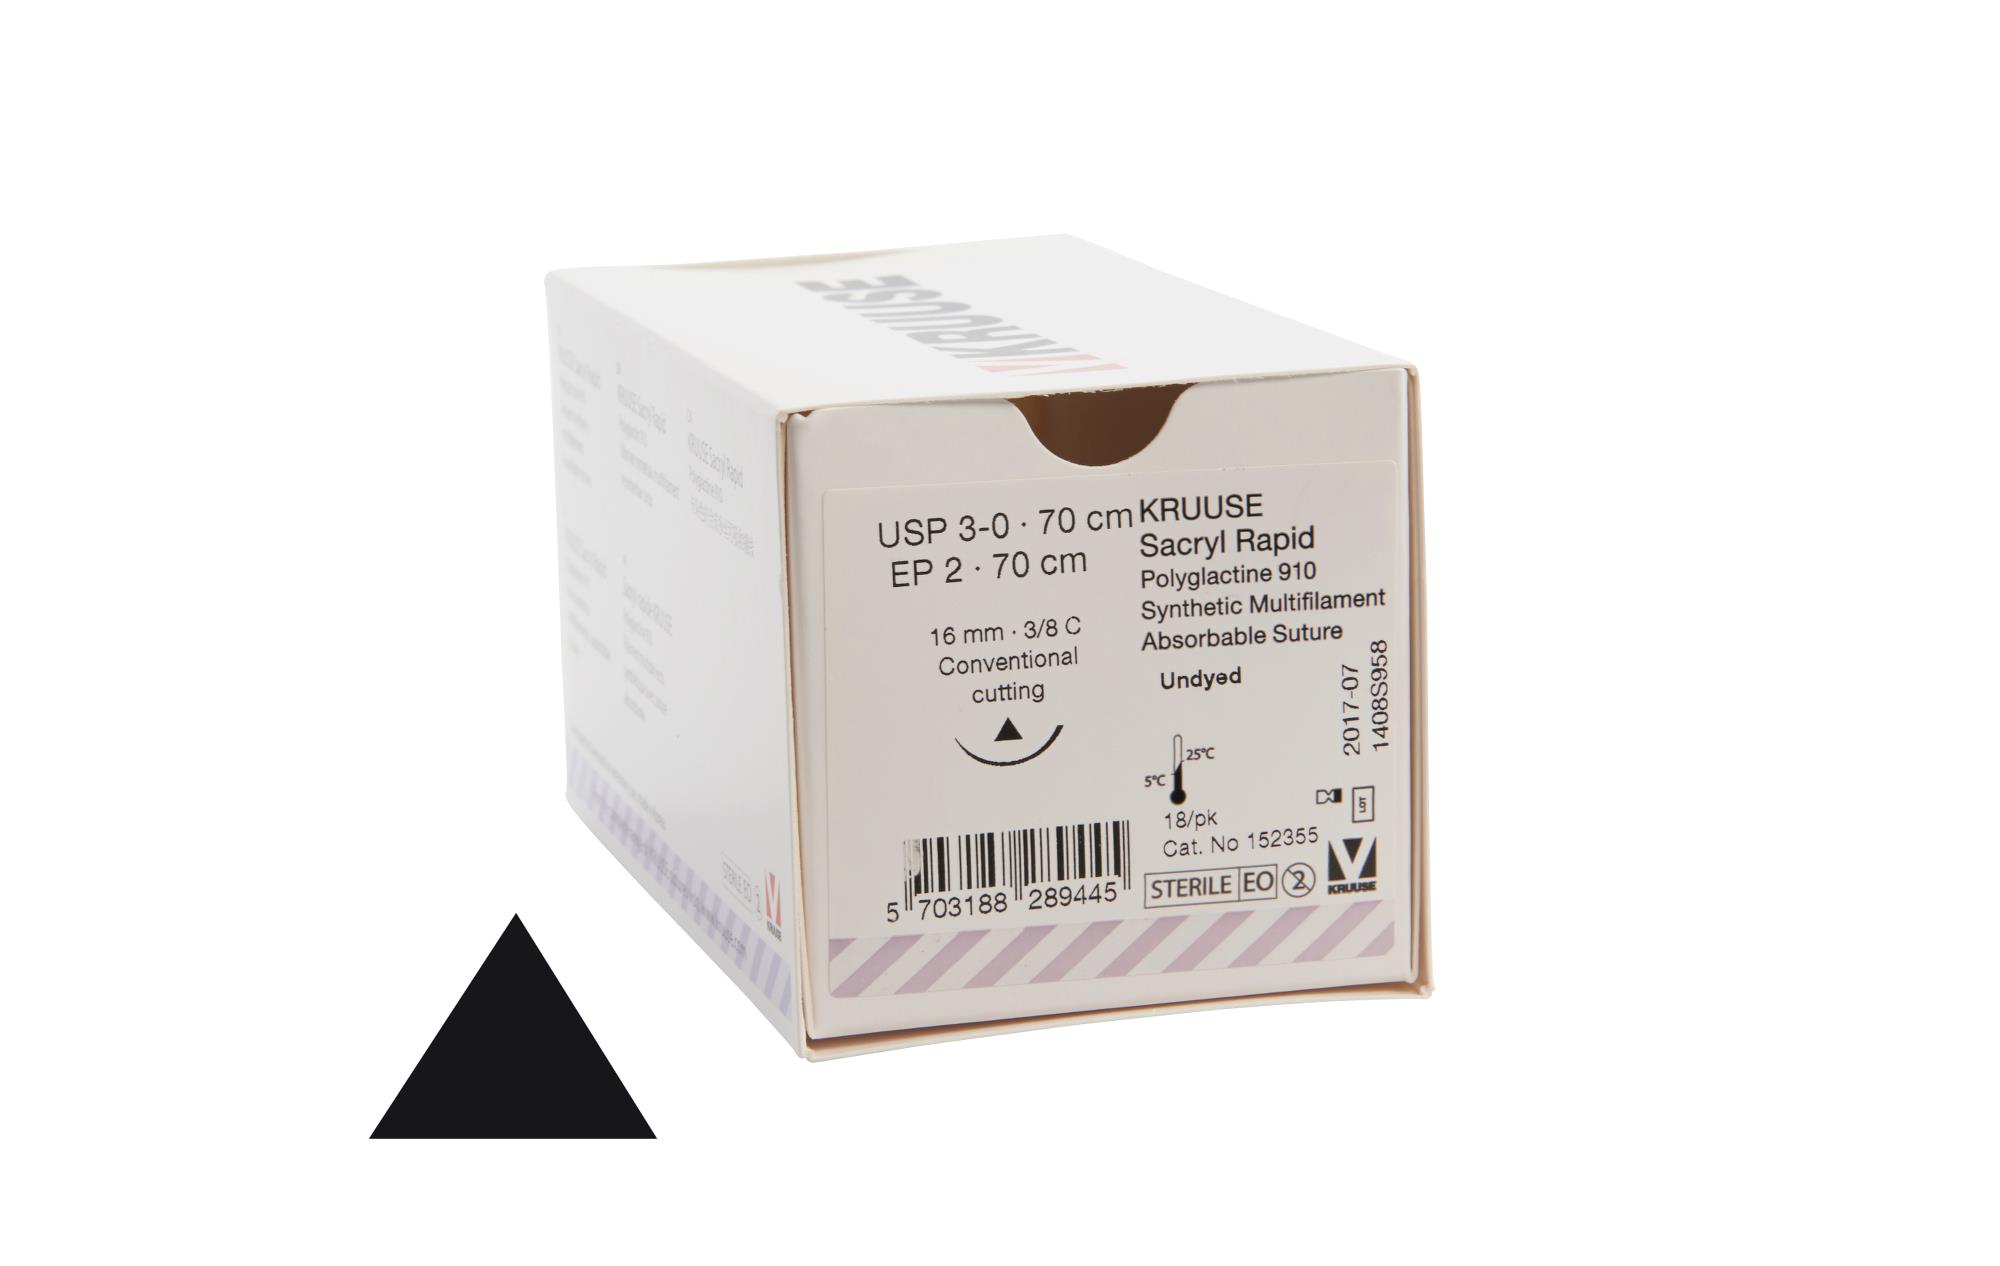 KRUUSE Sacryl Rapid Suture, USP 3-0, 70 cm, undyed, 16 mm, 3/8 C, CC, 18/pk